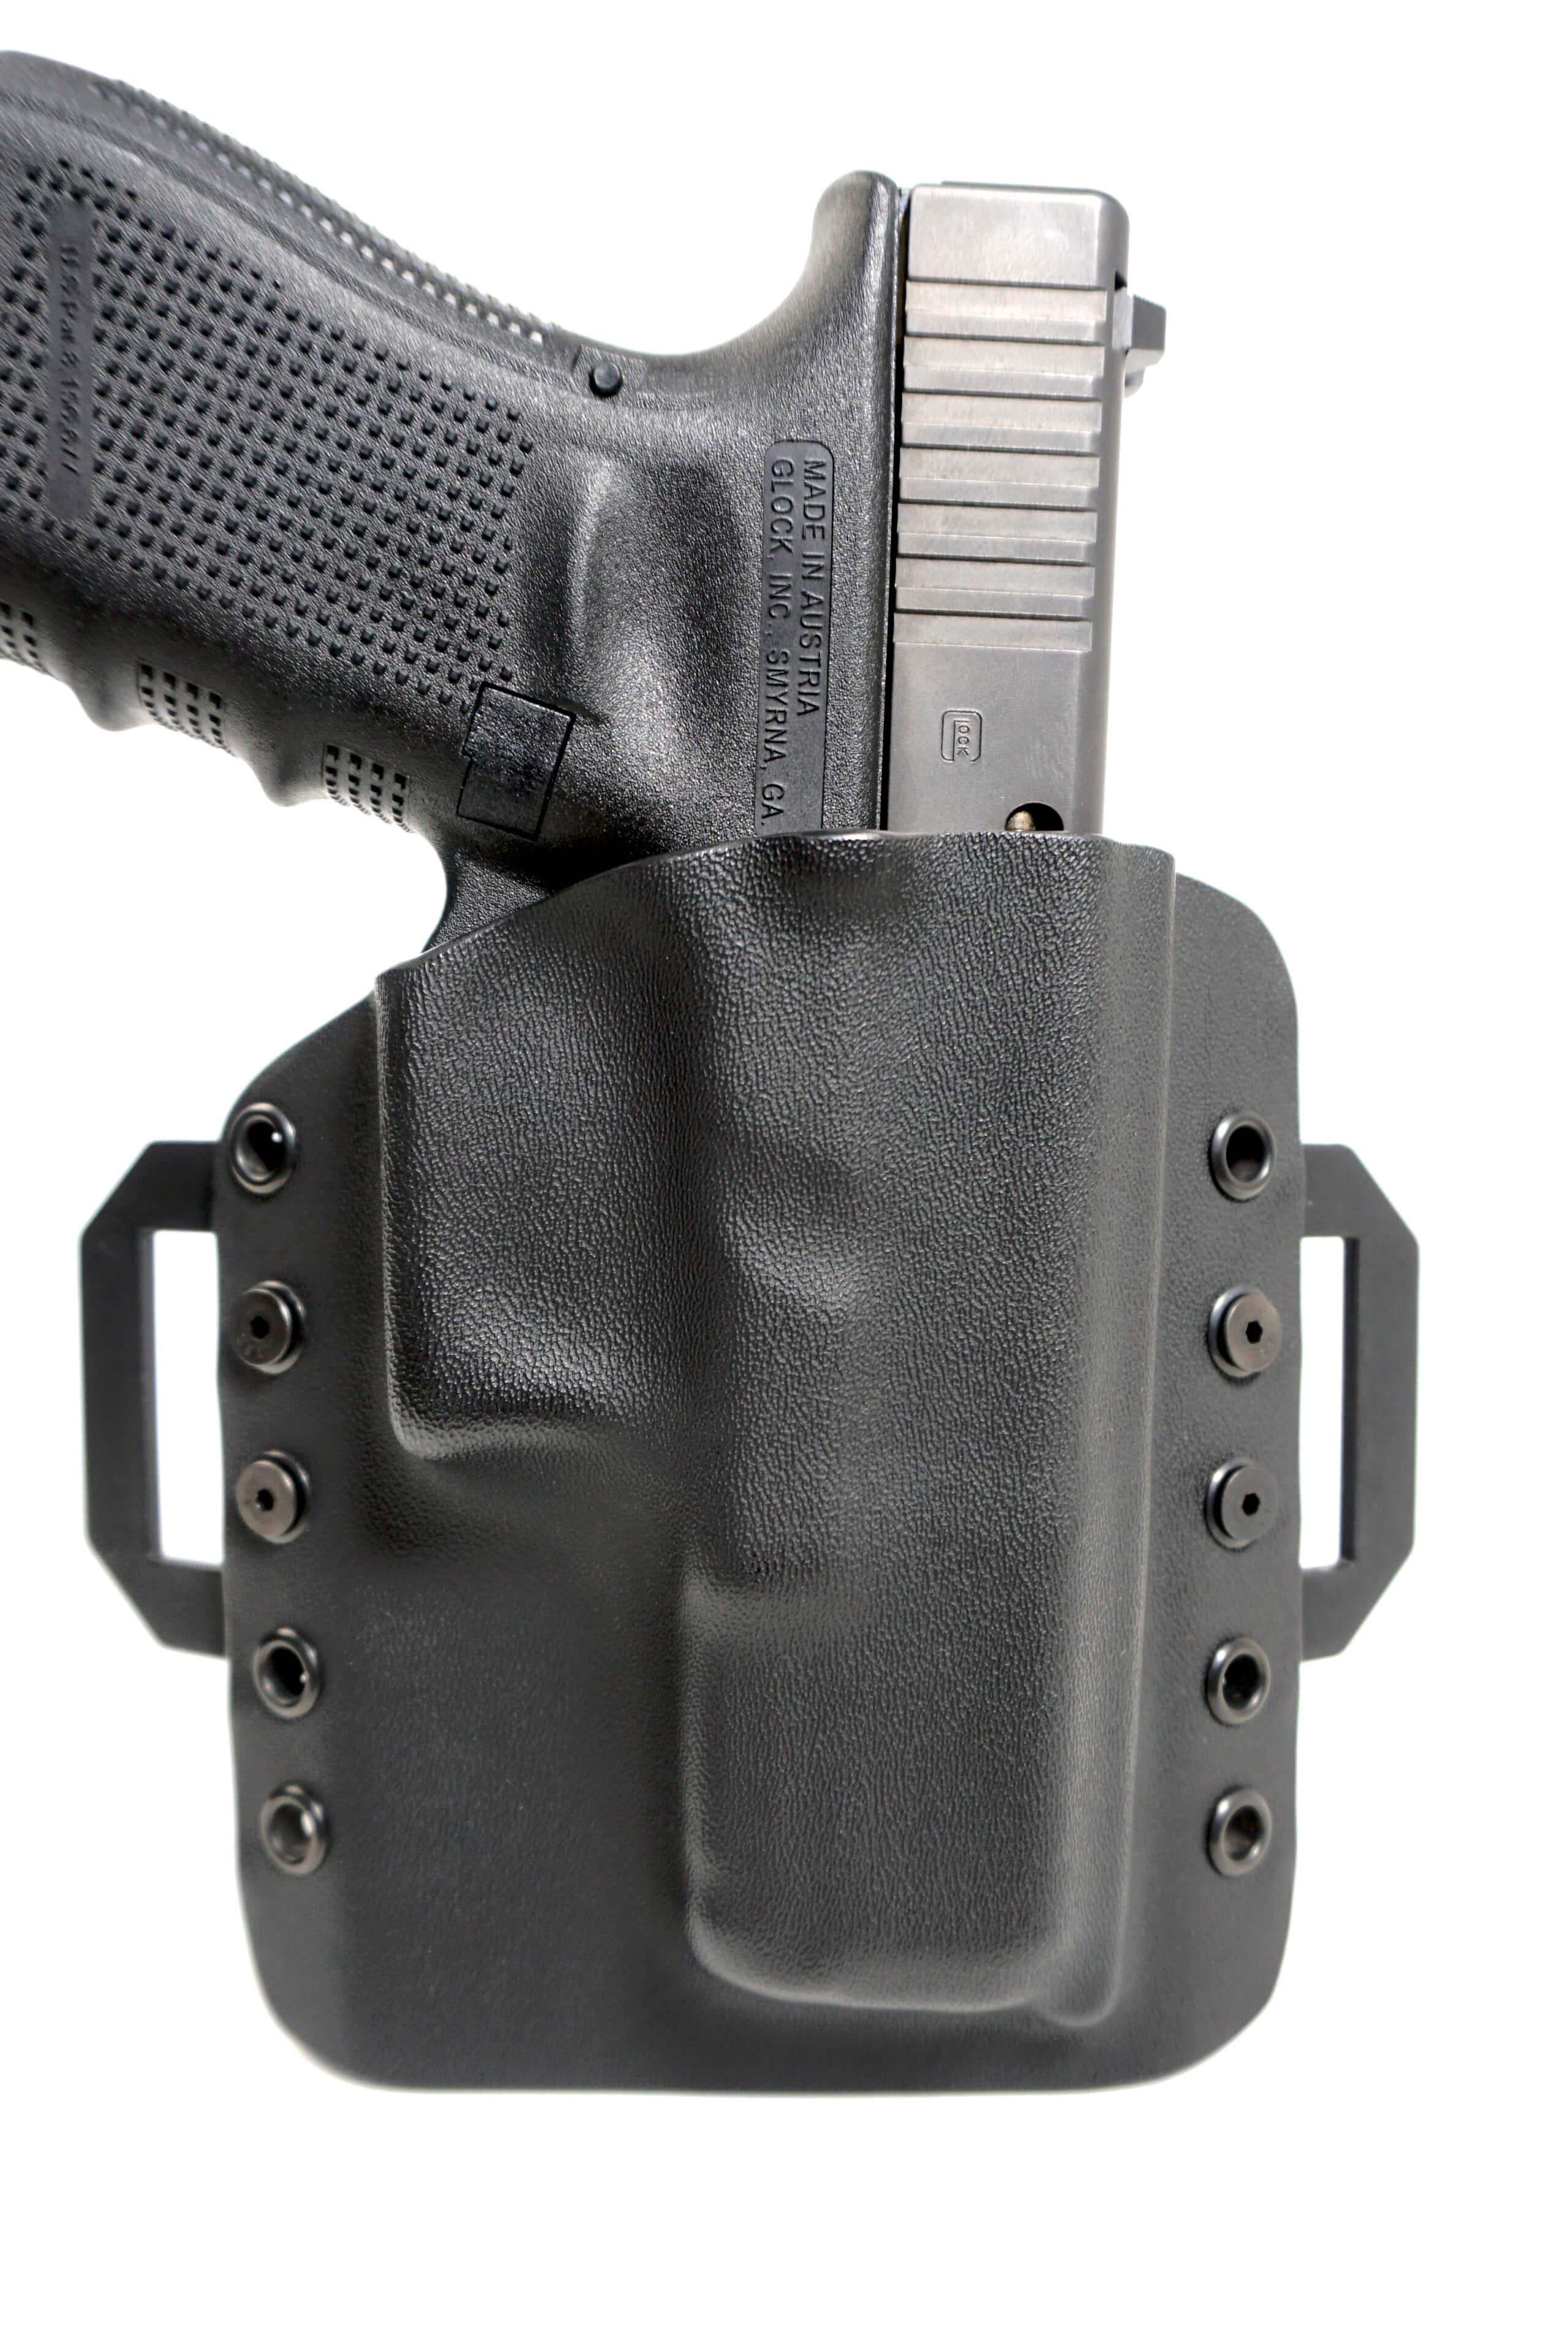 Belt Ride Leather Gun Holster LH RH For S&W Shield M 2.0 w/ Laser